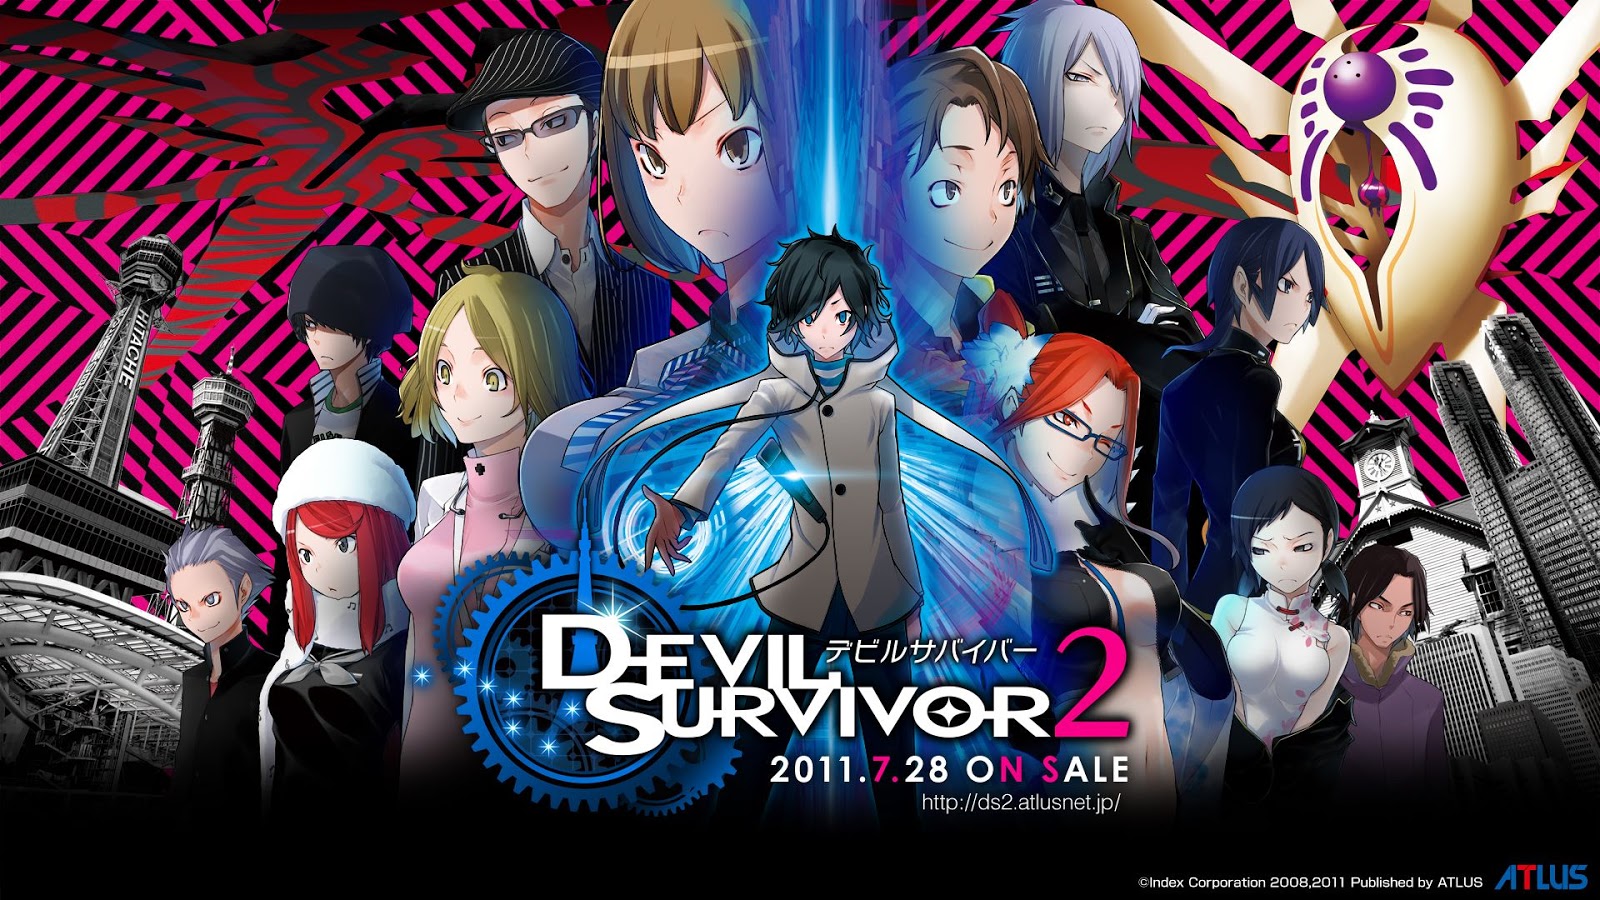 [MP4 - MKV] Devil Survivor 2: The Animation [Vietsub]